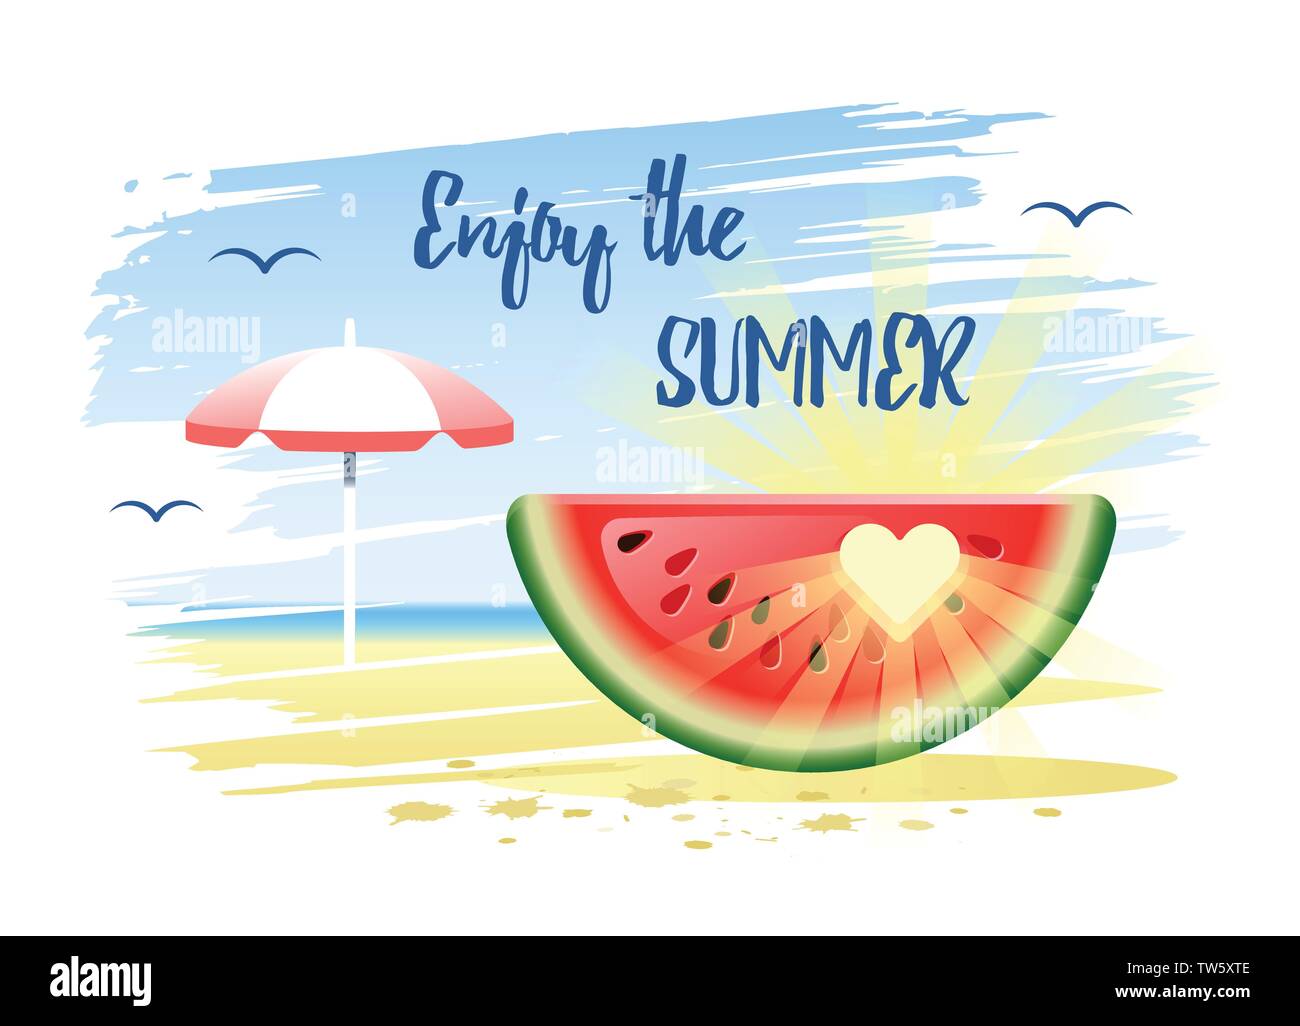 Enjoy The Summer. Summer Holidays concept with watermelon, sun and beach umbrella on the sand beach background. Vector illustration. Stock Vector